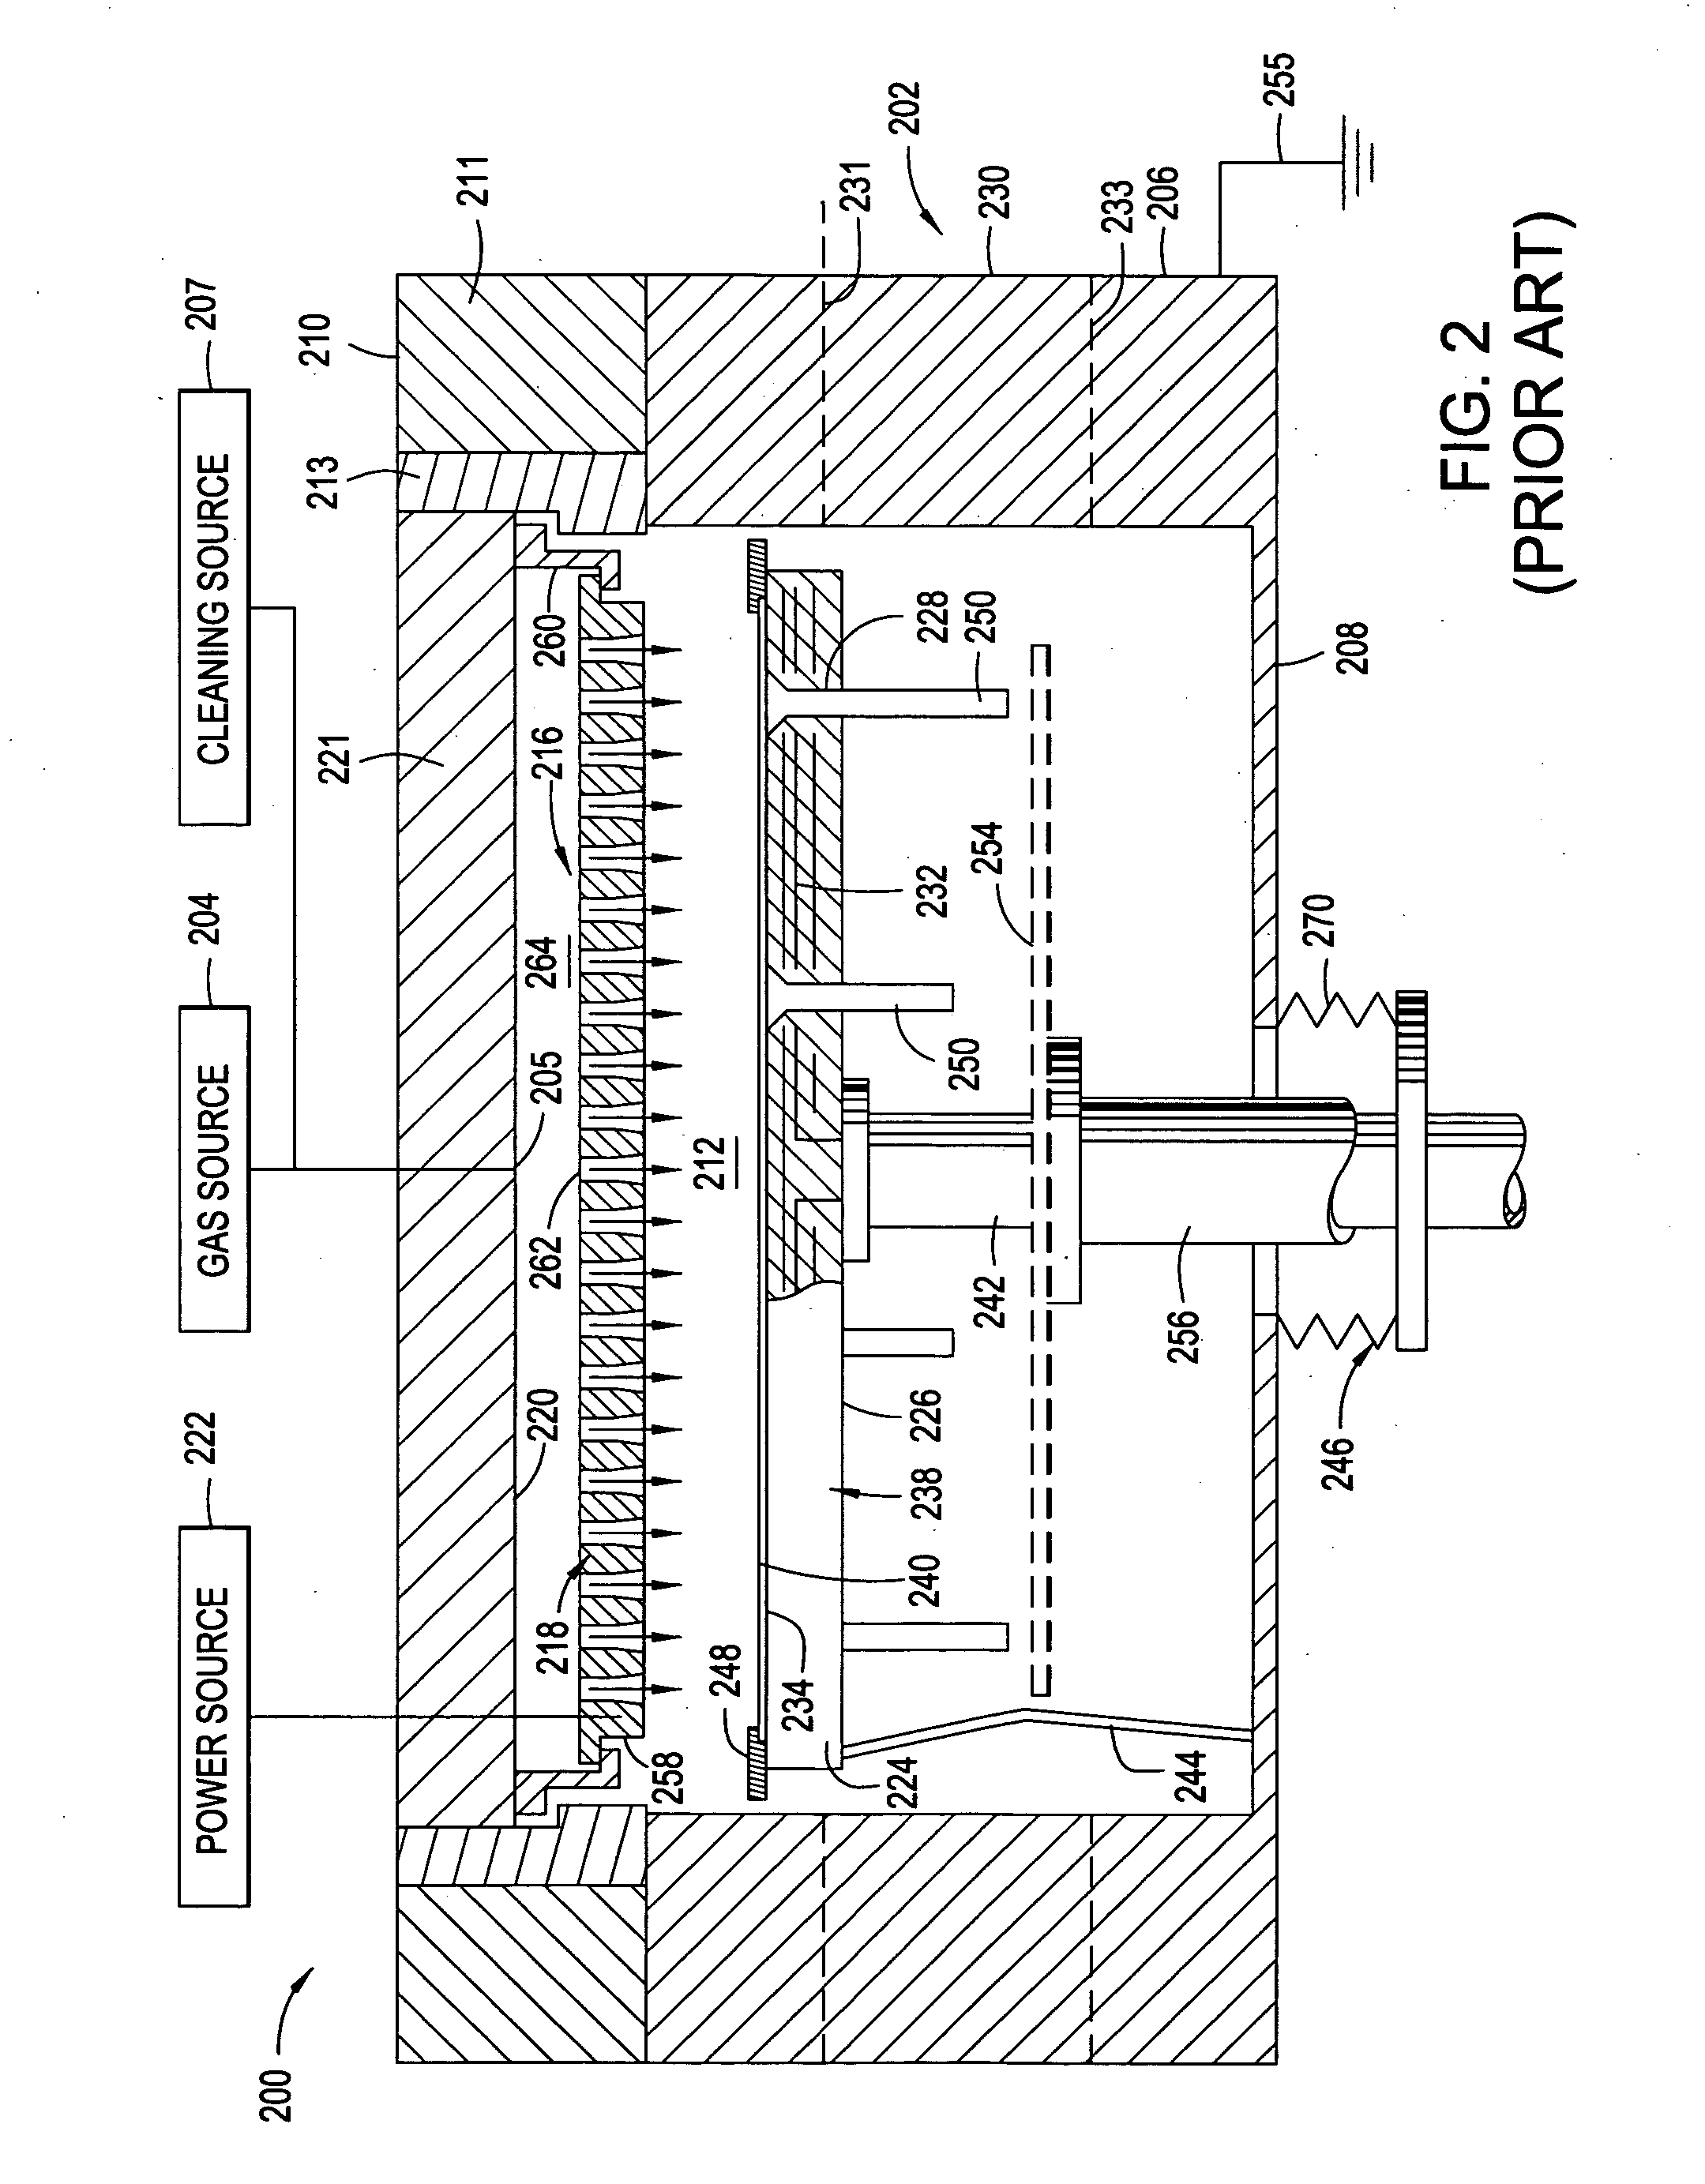 RF grounding of cathode in process chamber